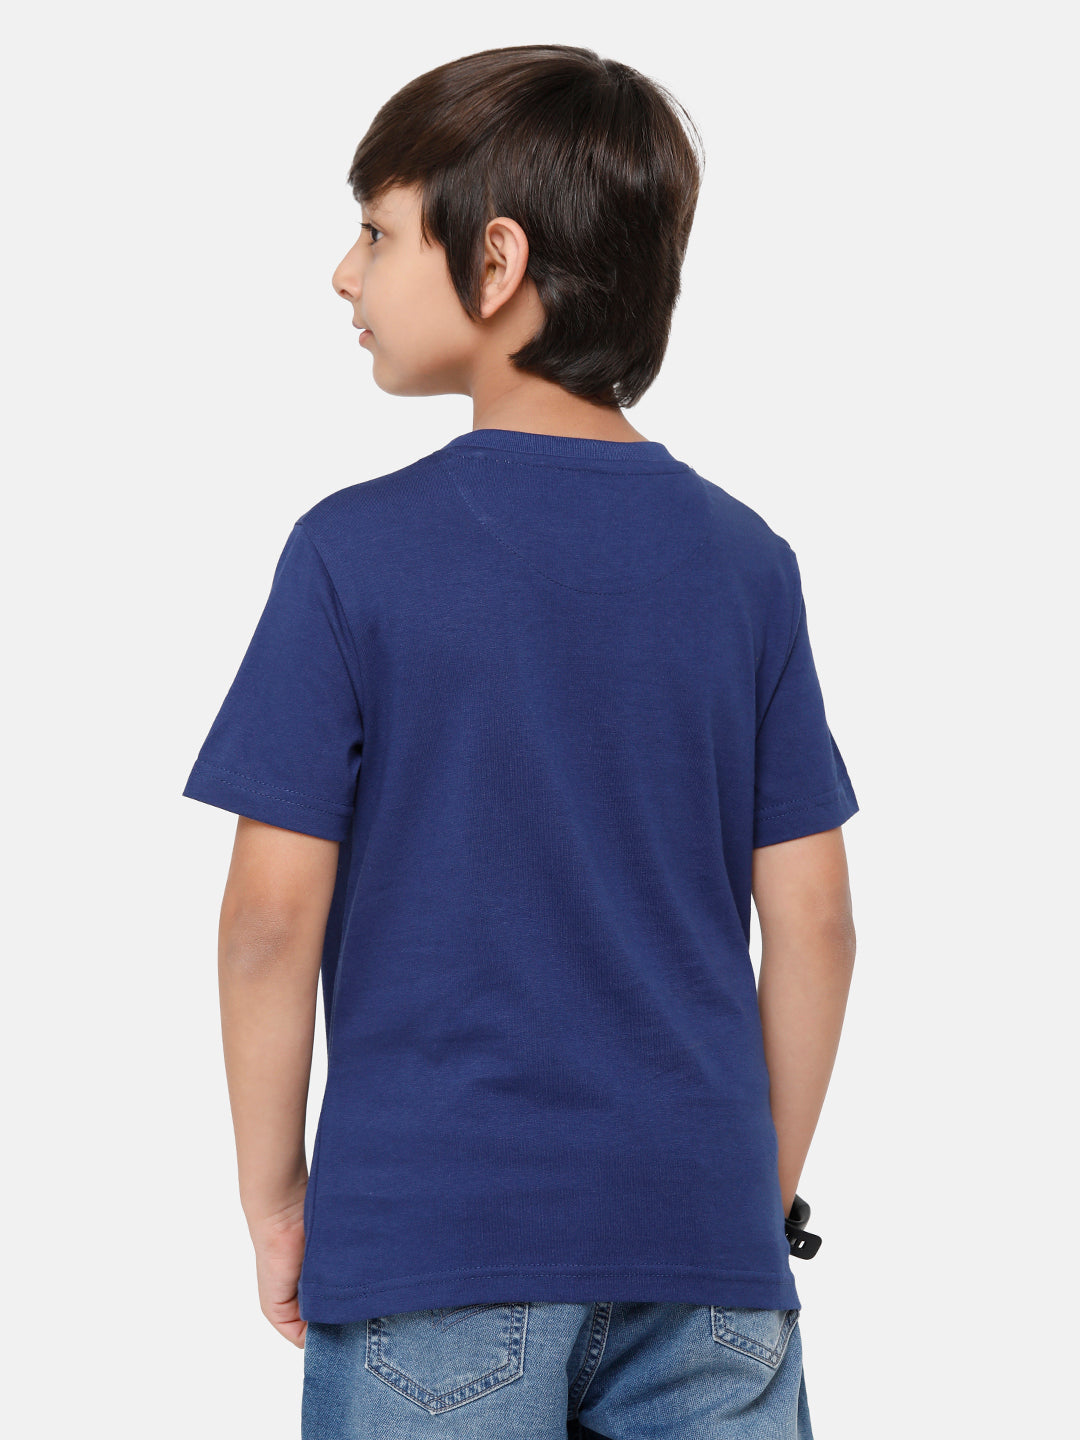 CP Boys Blue Slim Fit Round Neck T-Shirt T-shirt Classic Polo 